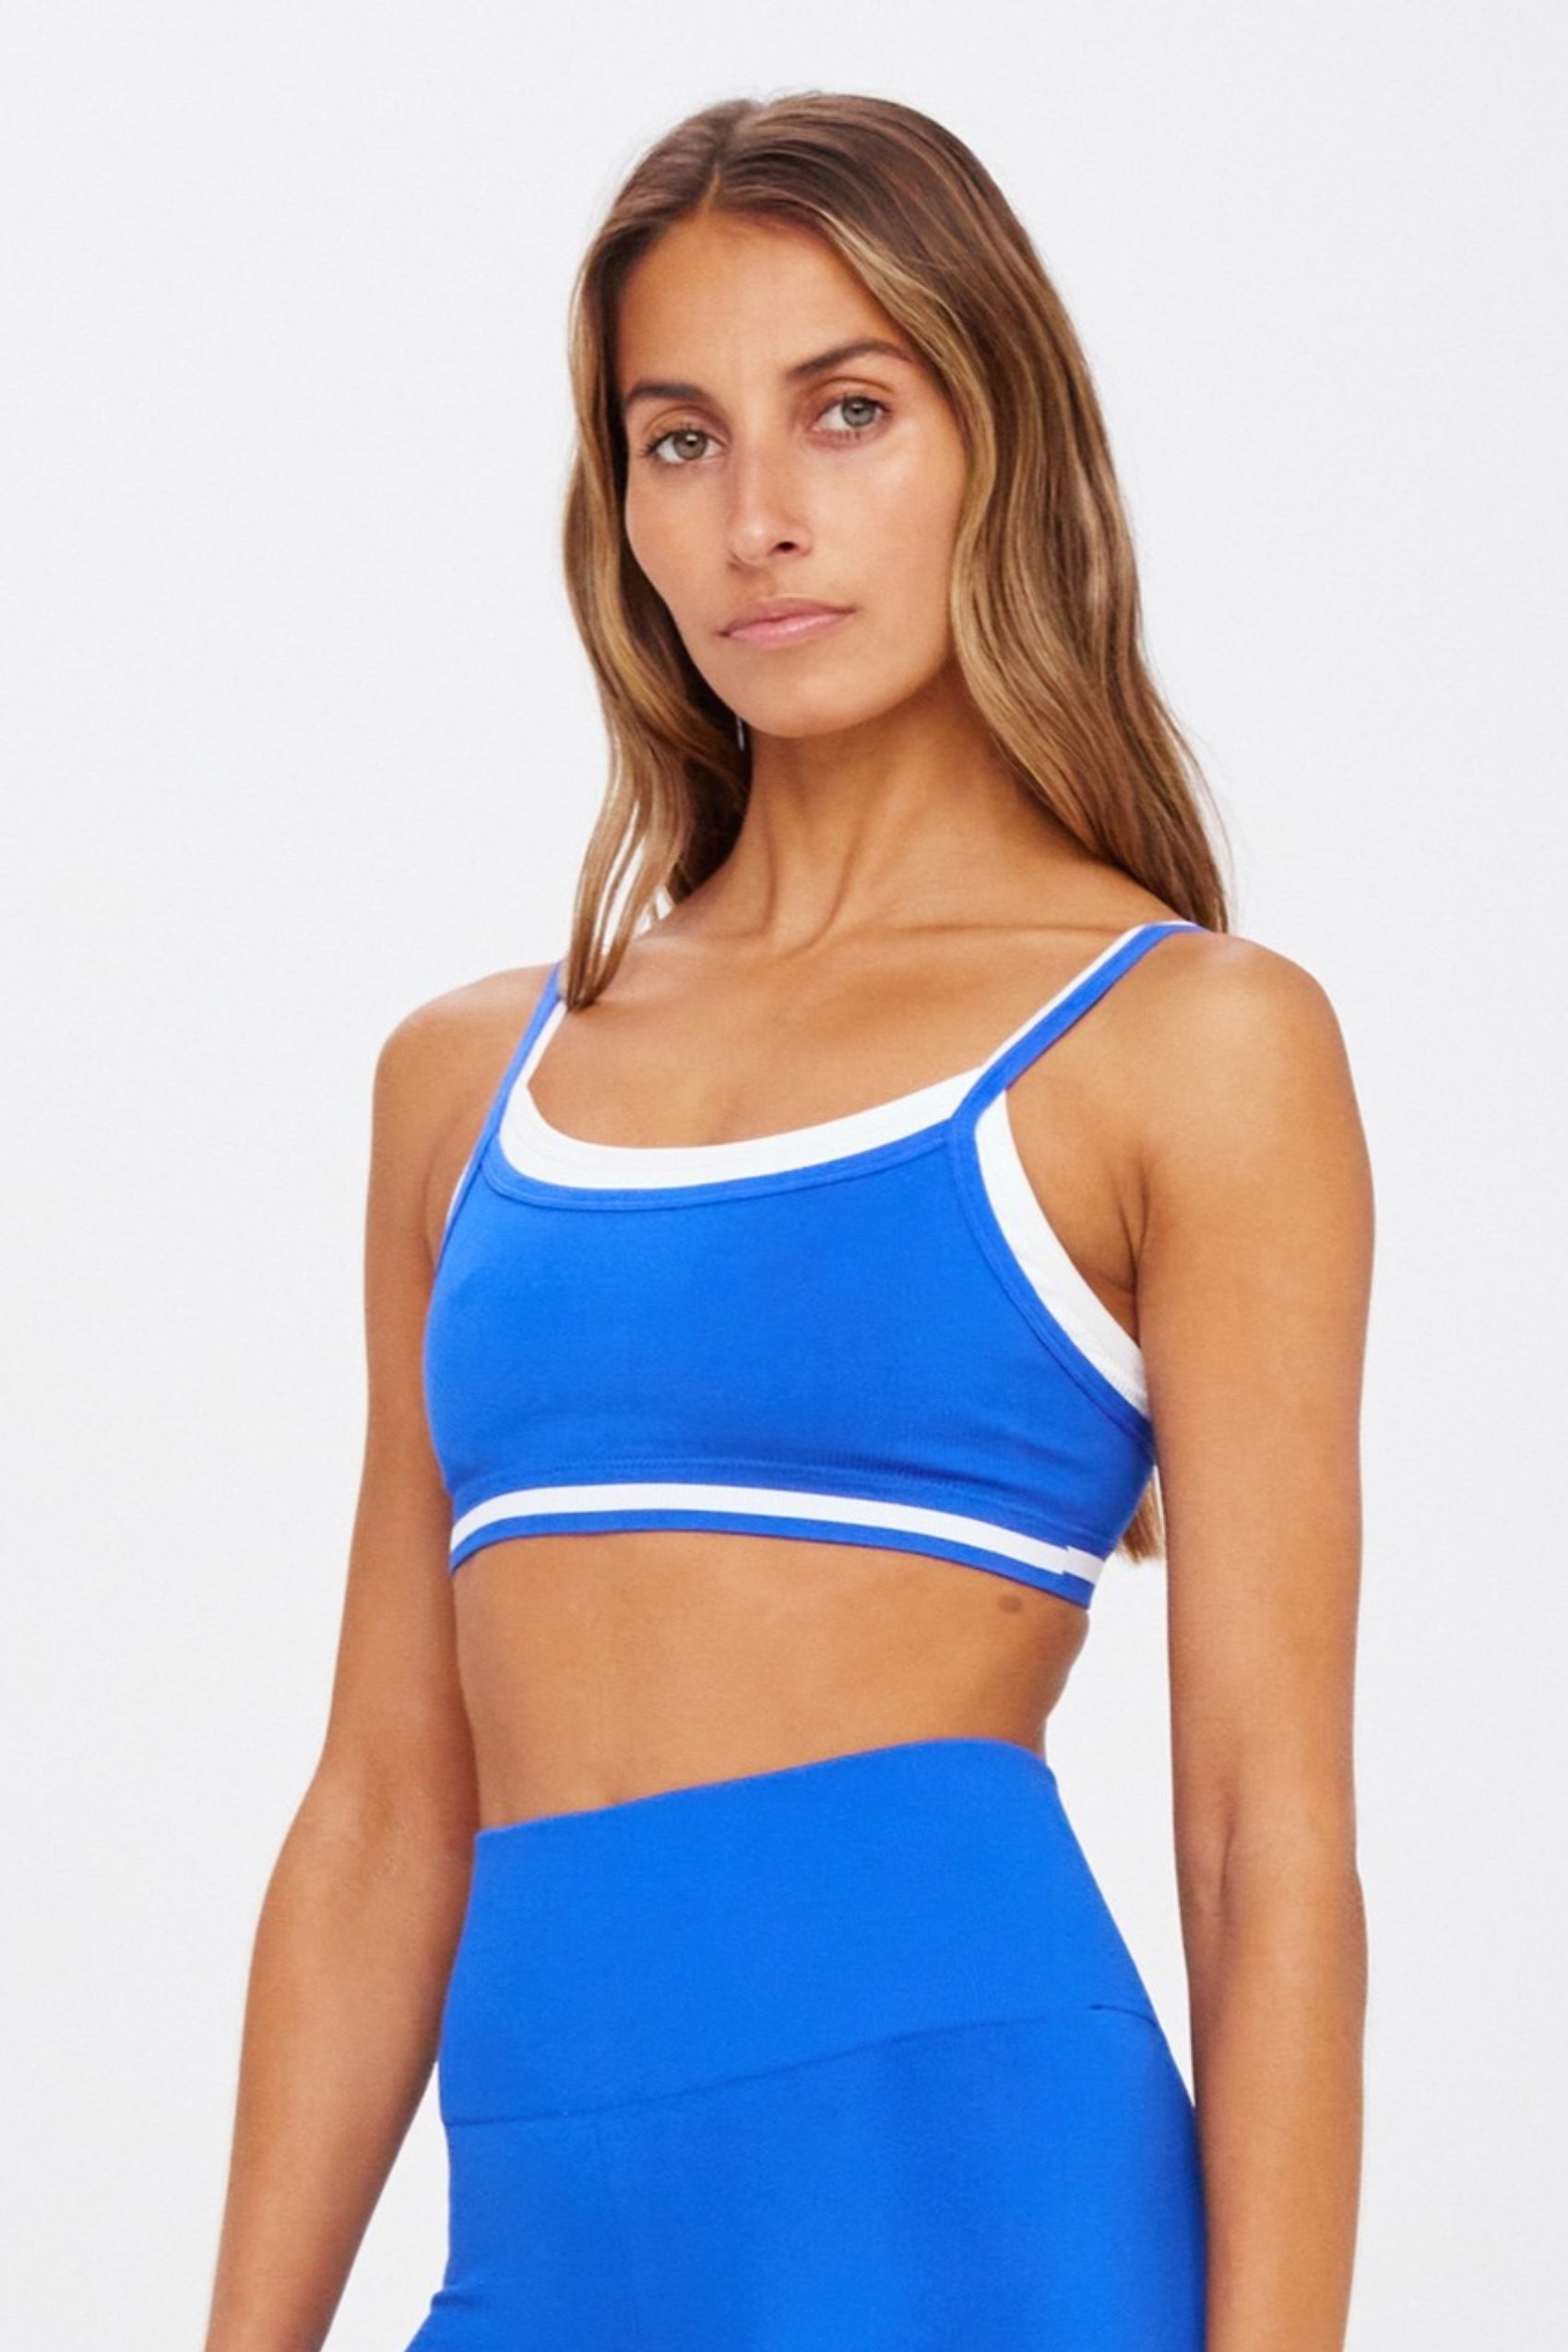 TASADA V-Neck Sports Bras for Women - Wirefree Padded Yoga Bra Running  Workout Aesthetic Crop Tank Tops, Blue, XXL price in UAE,  UAE